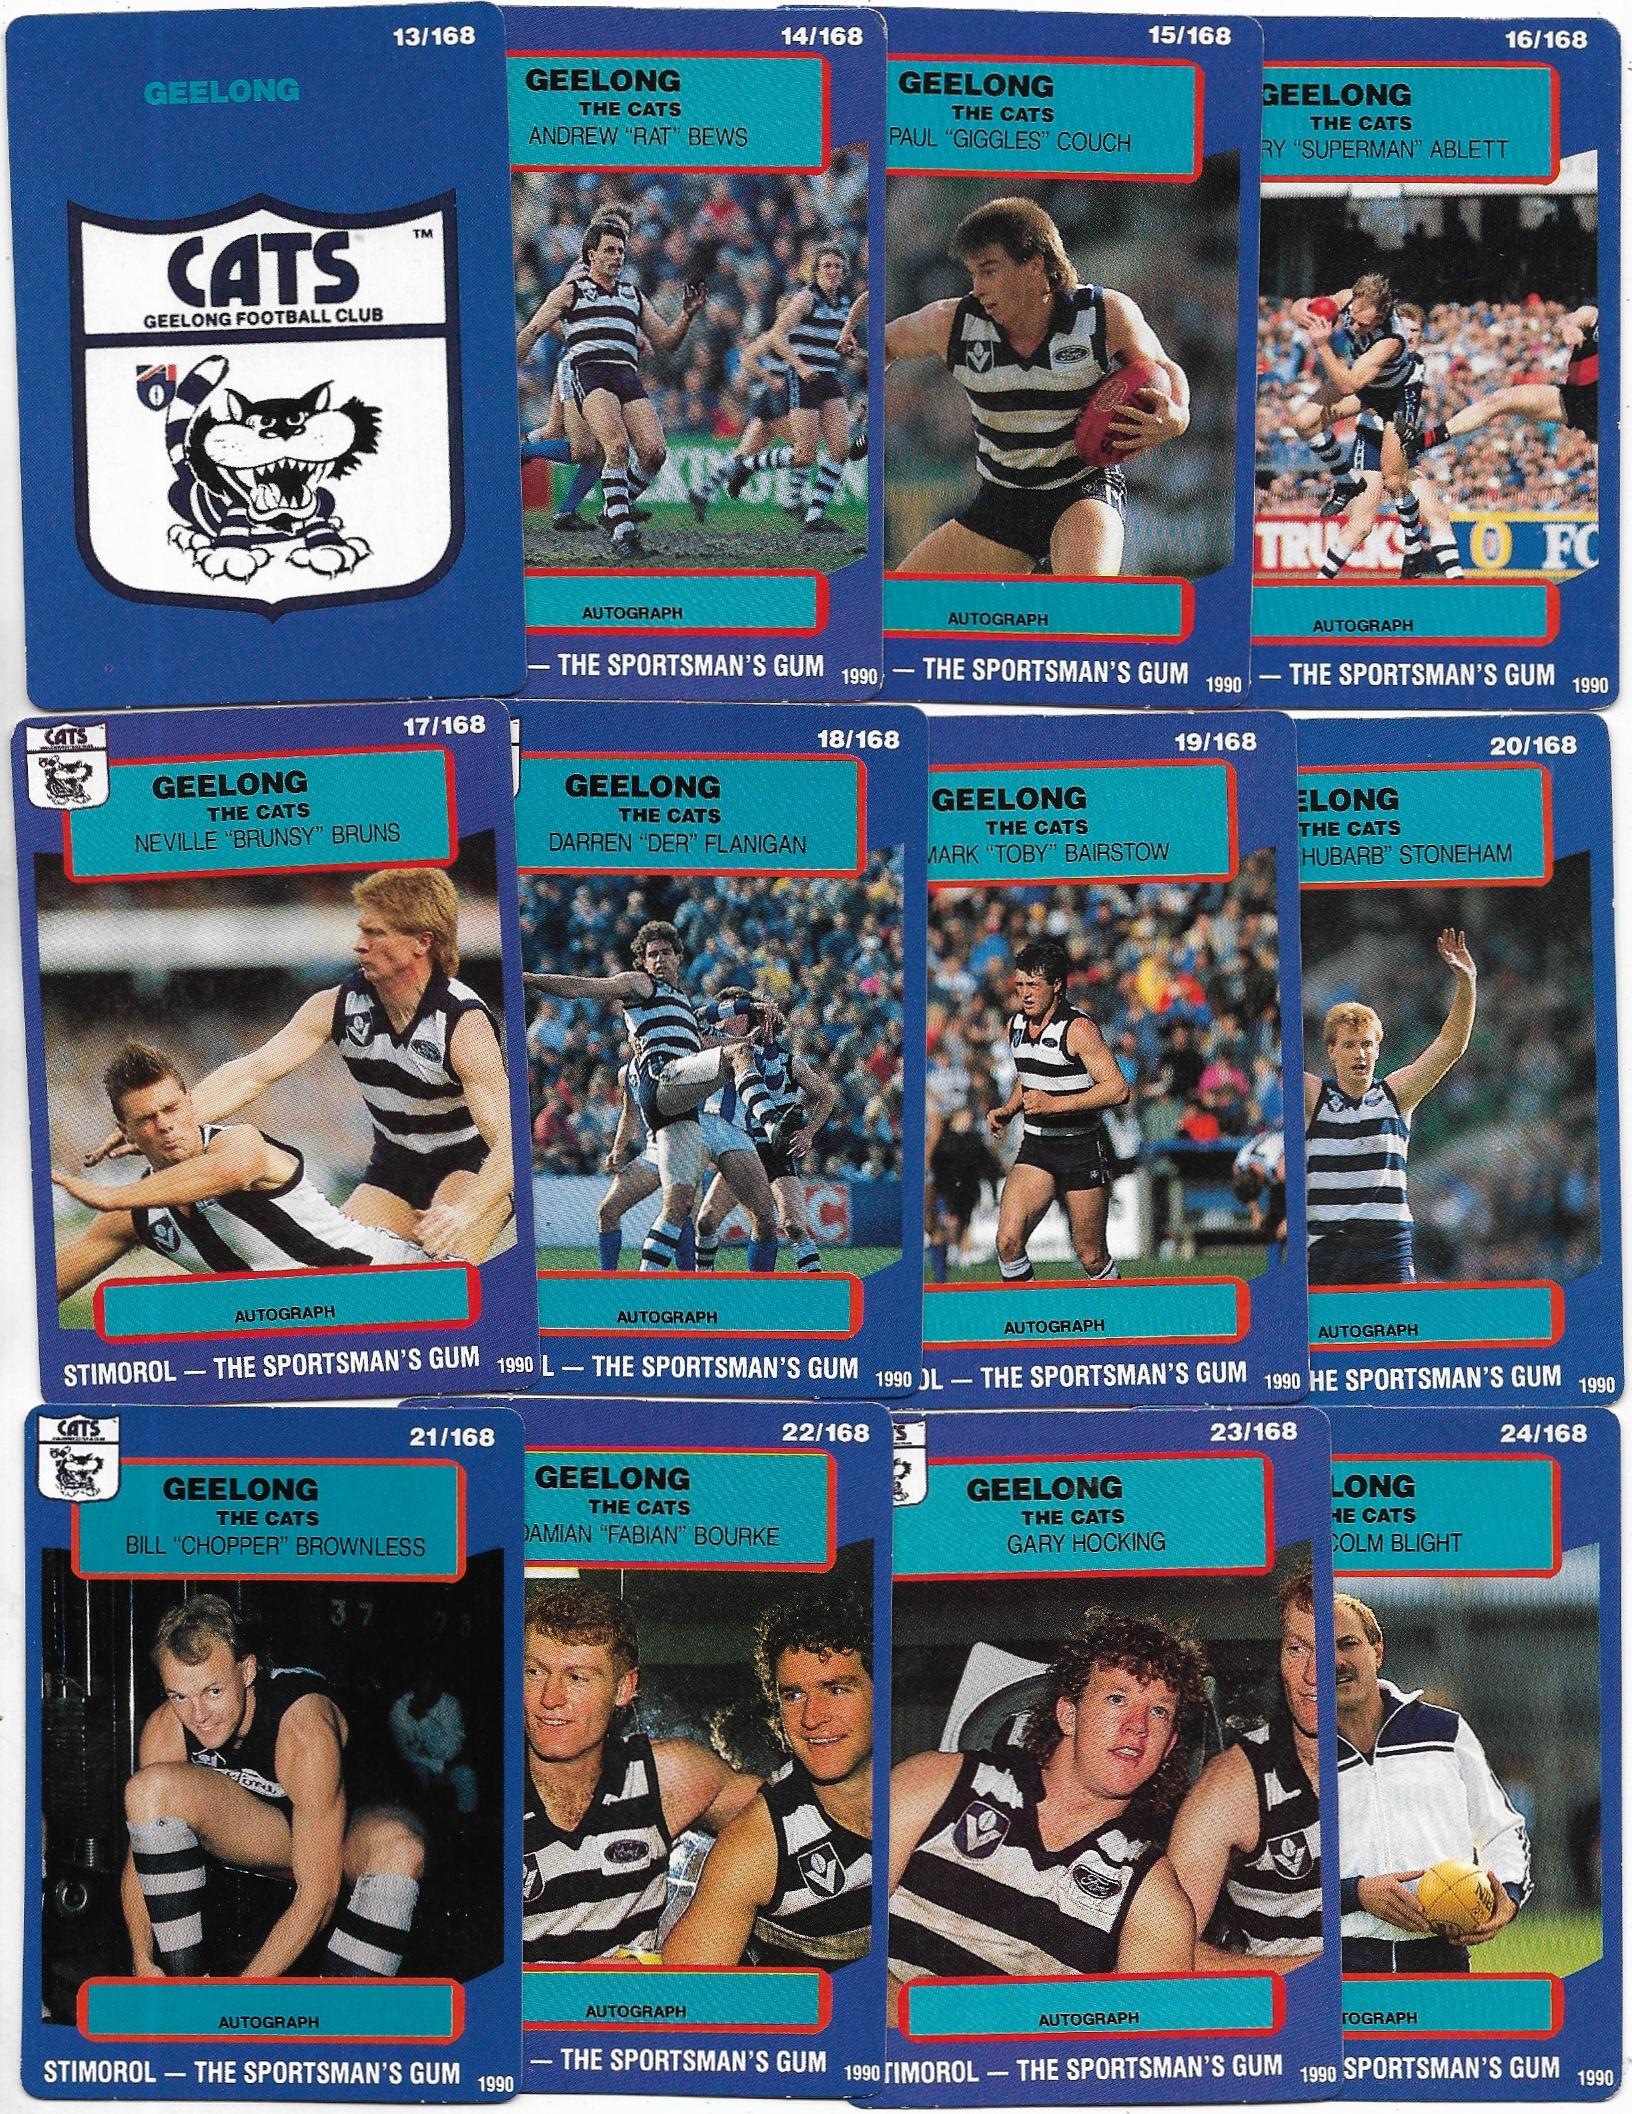 1990 Stimorol Team Set – Geelong